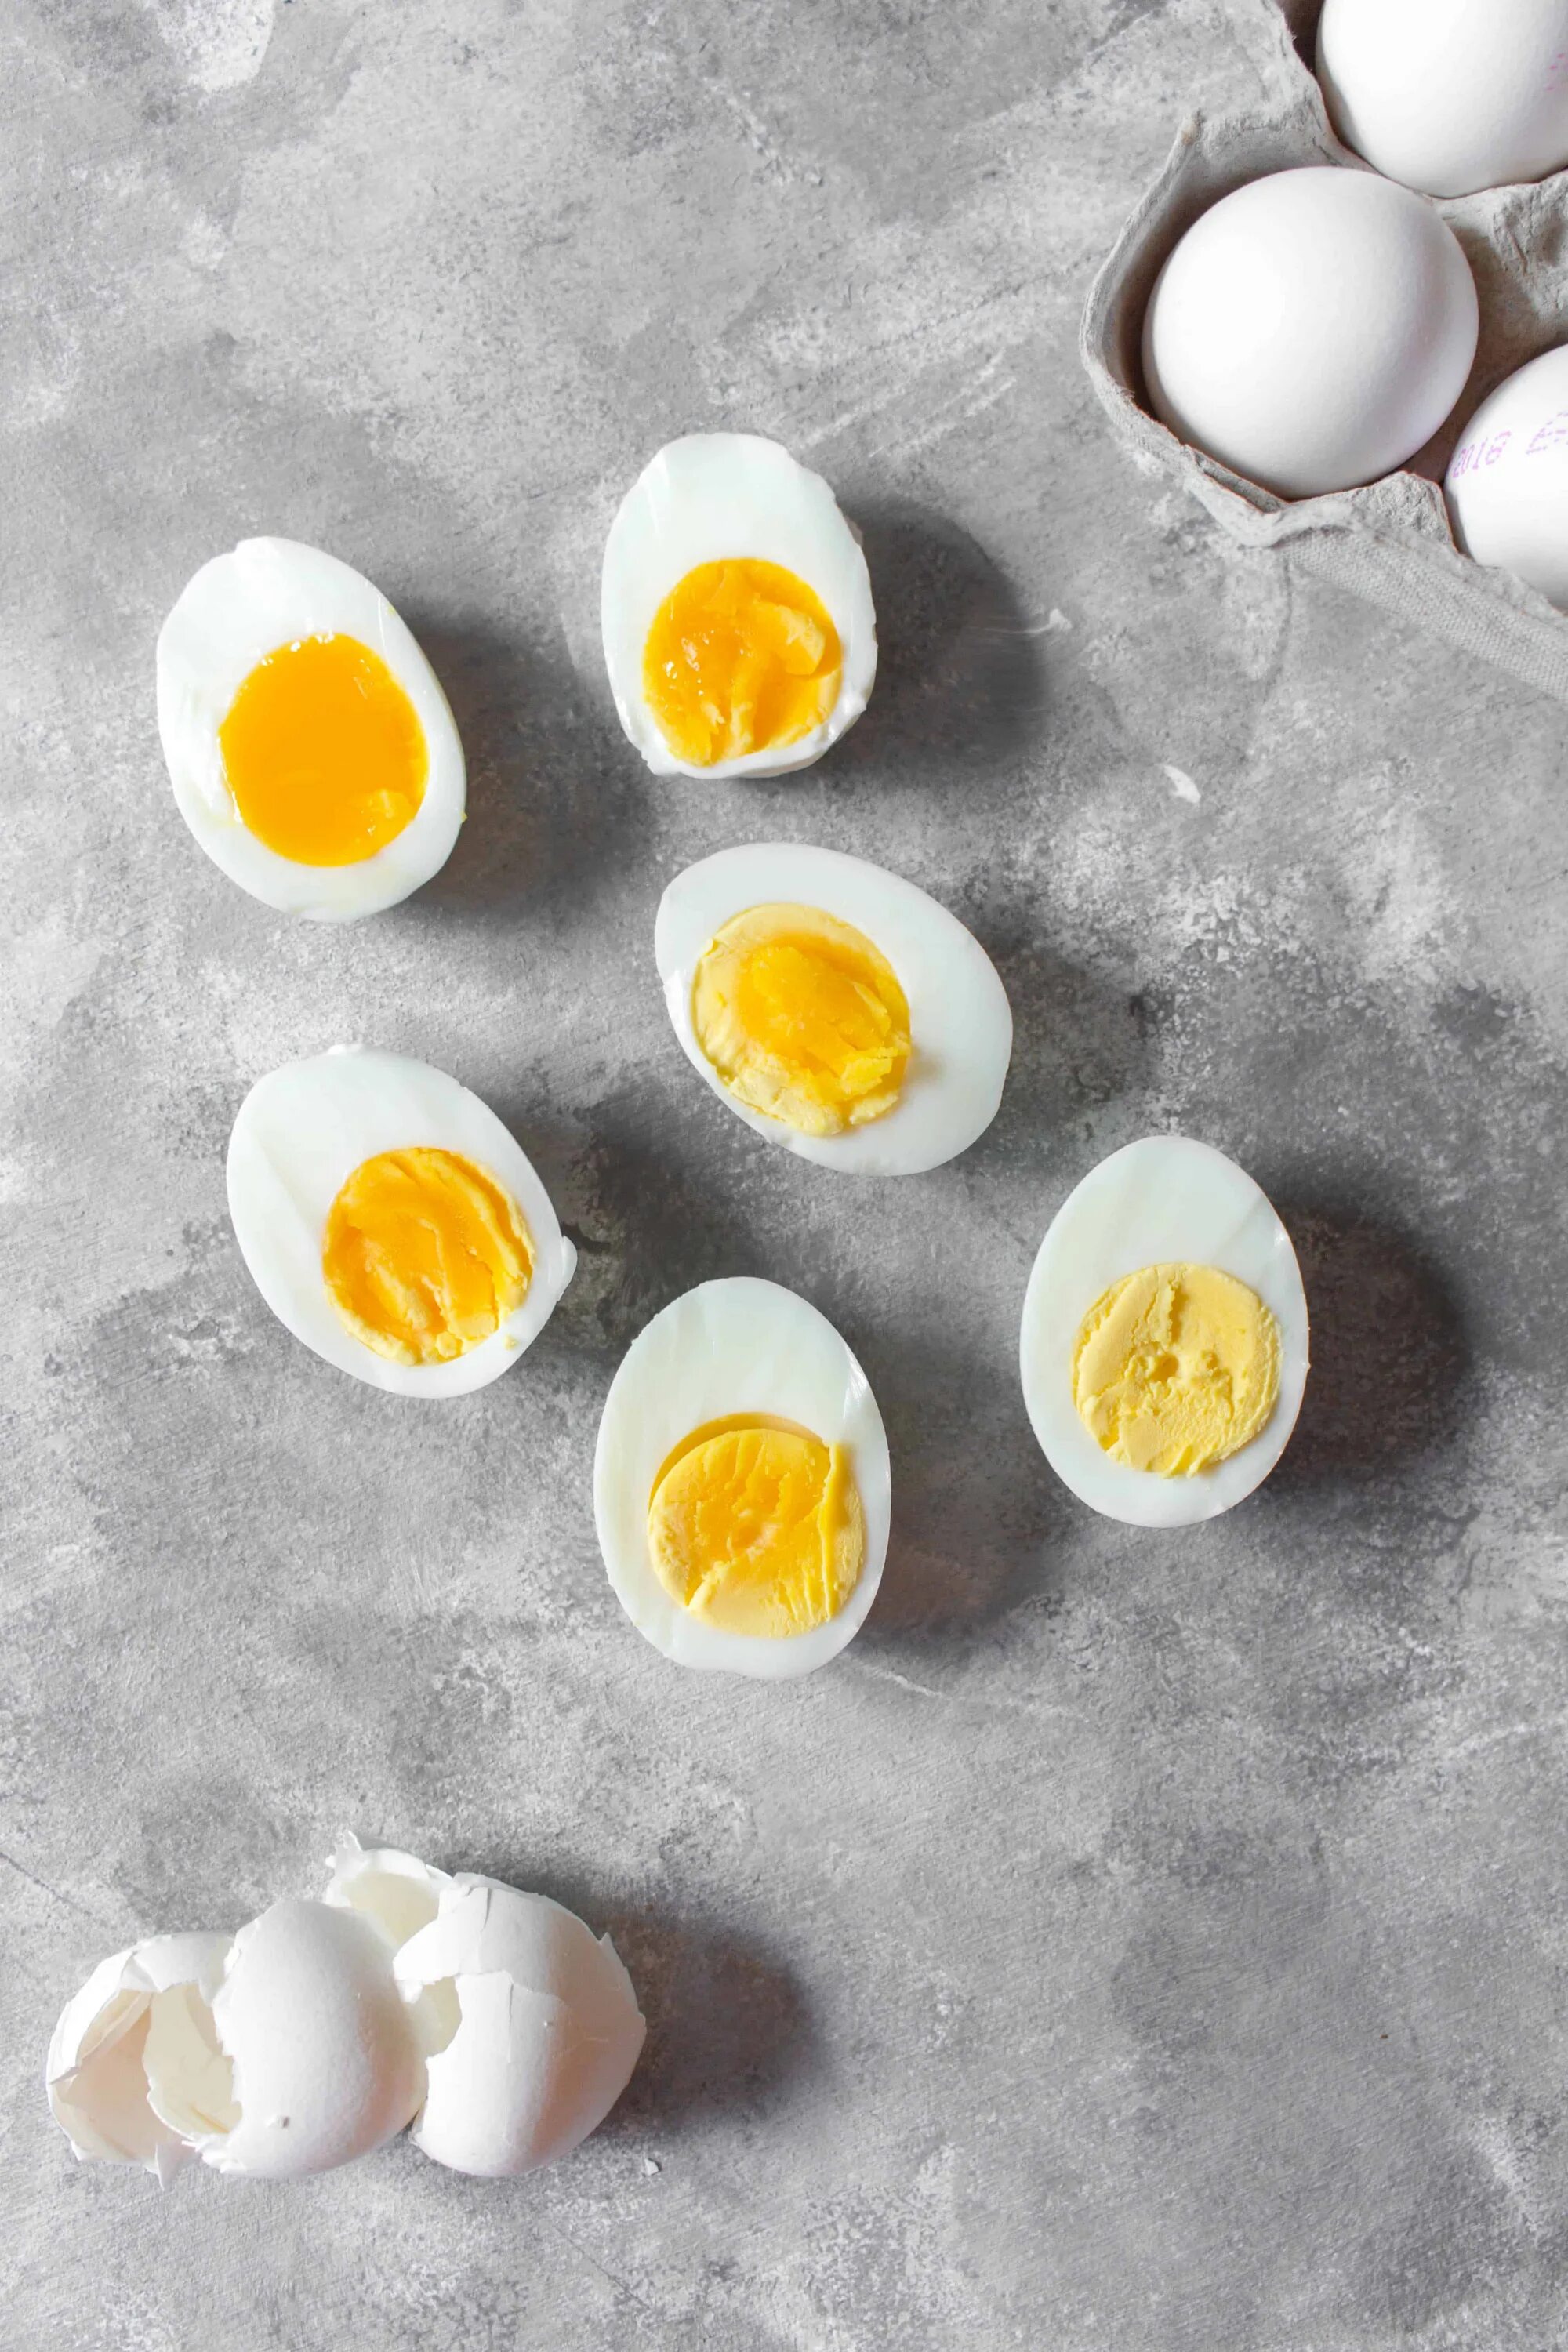 Cooked egg. Soft boiled Egg группа. Яйца вкрутую. Яйца сваренные вкрутую. Яичница вкрутую.